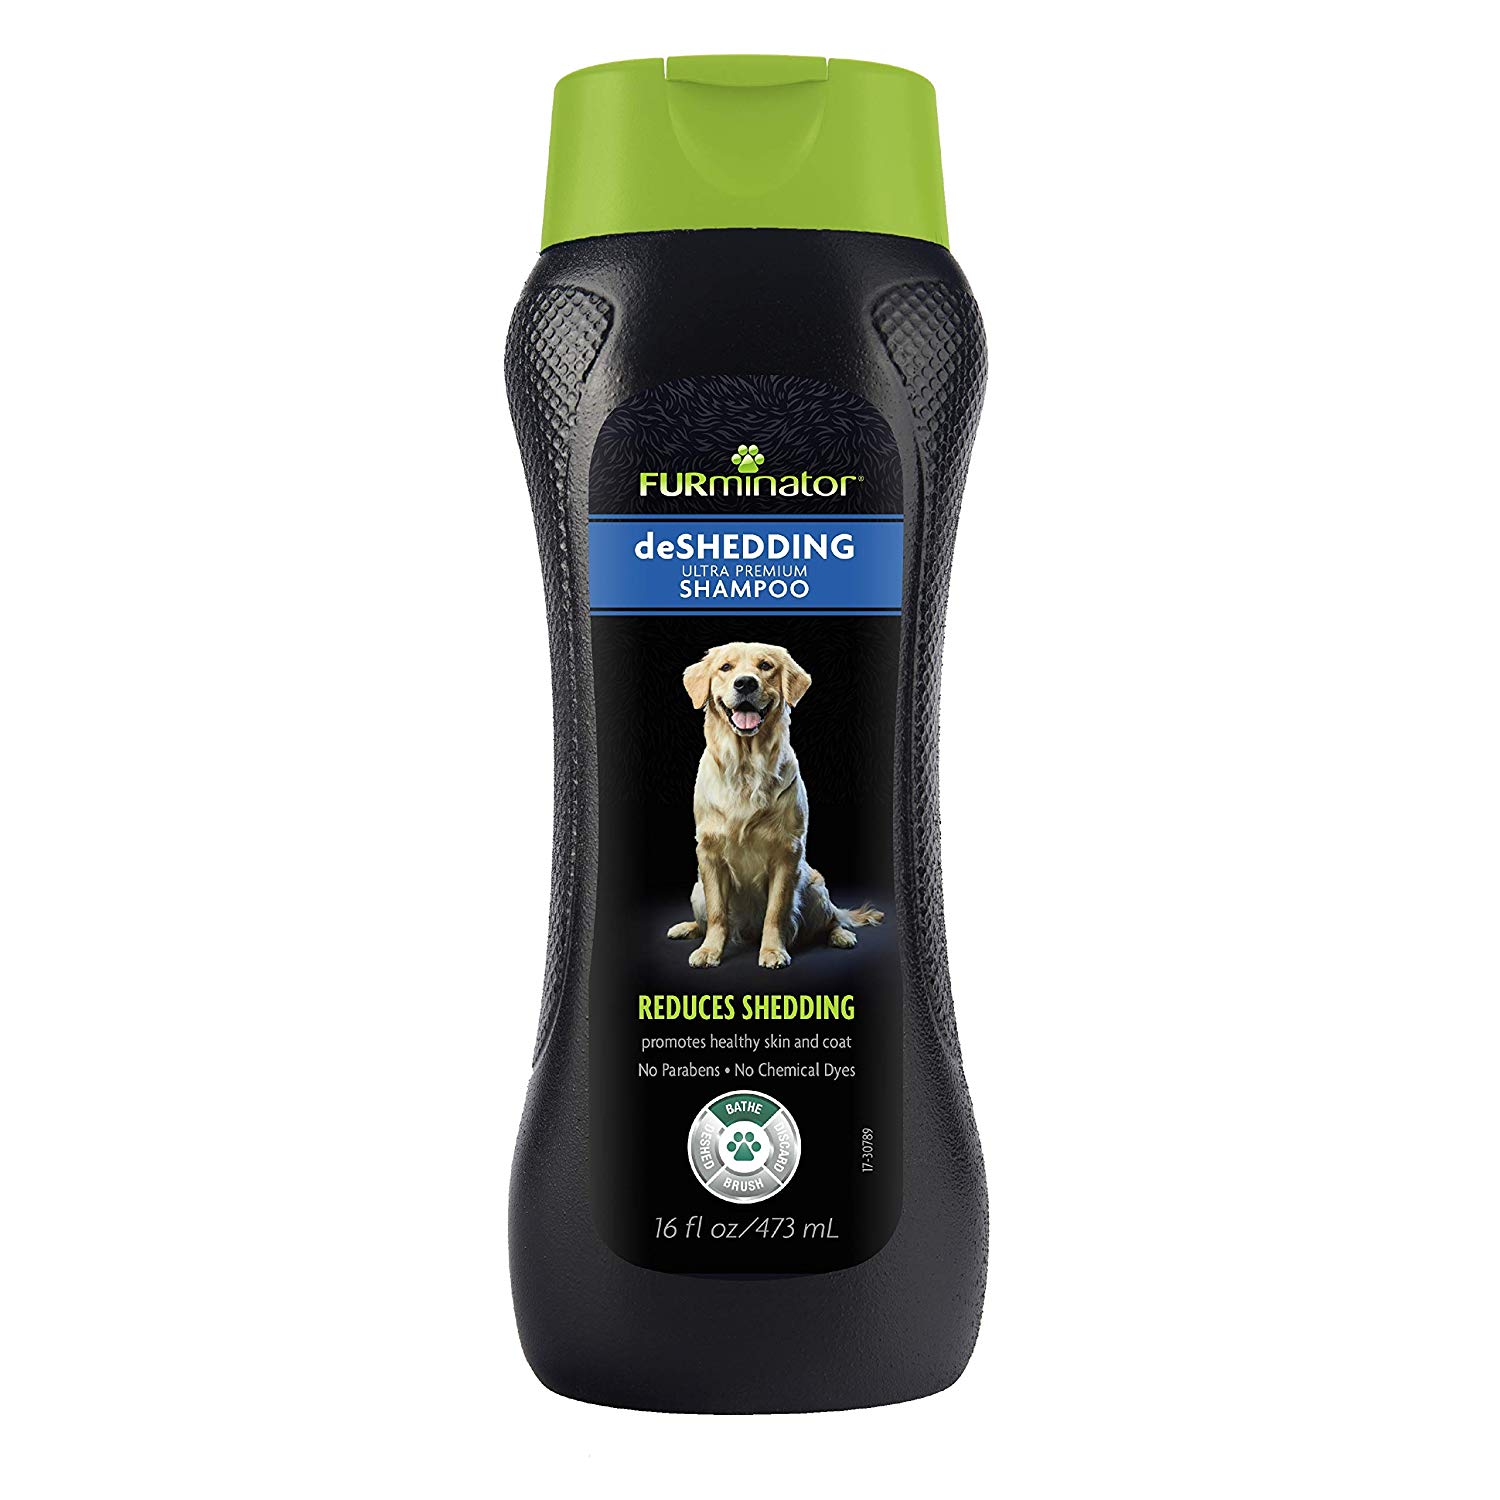 Furminator deShedding Dog Shampoo